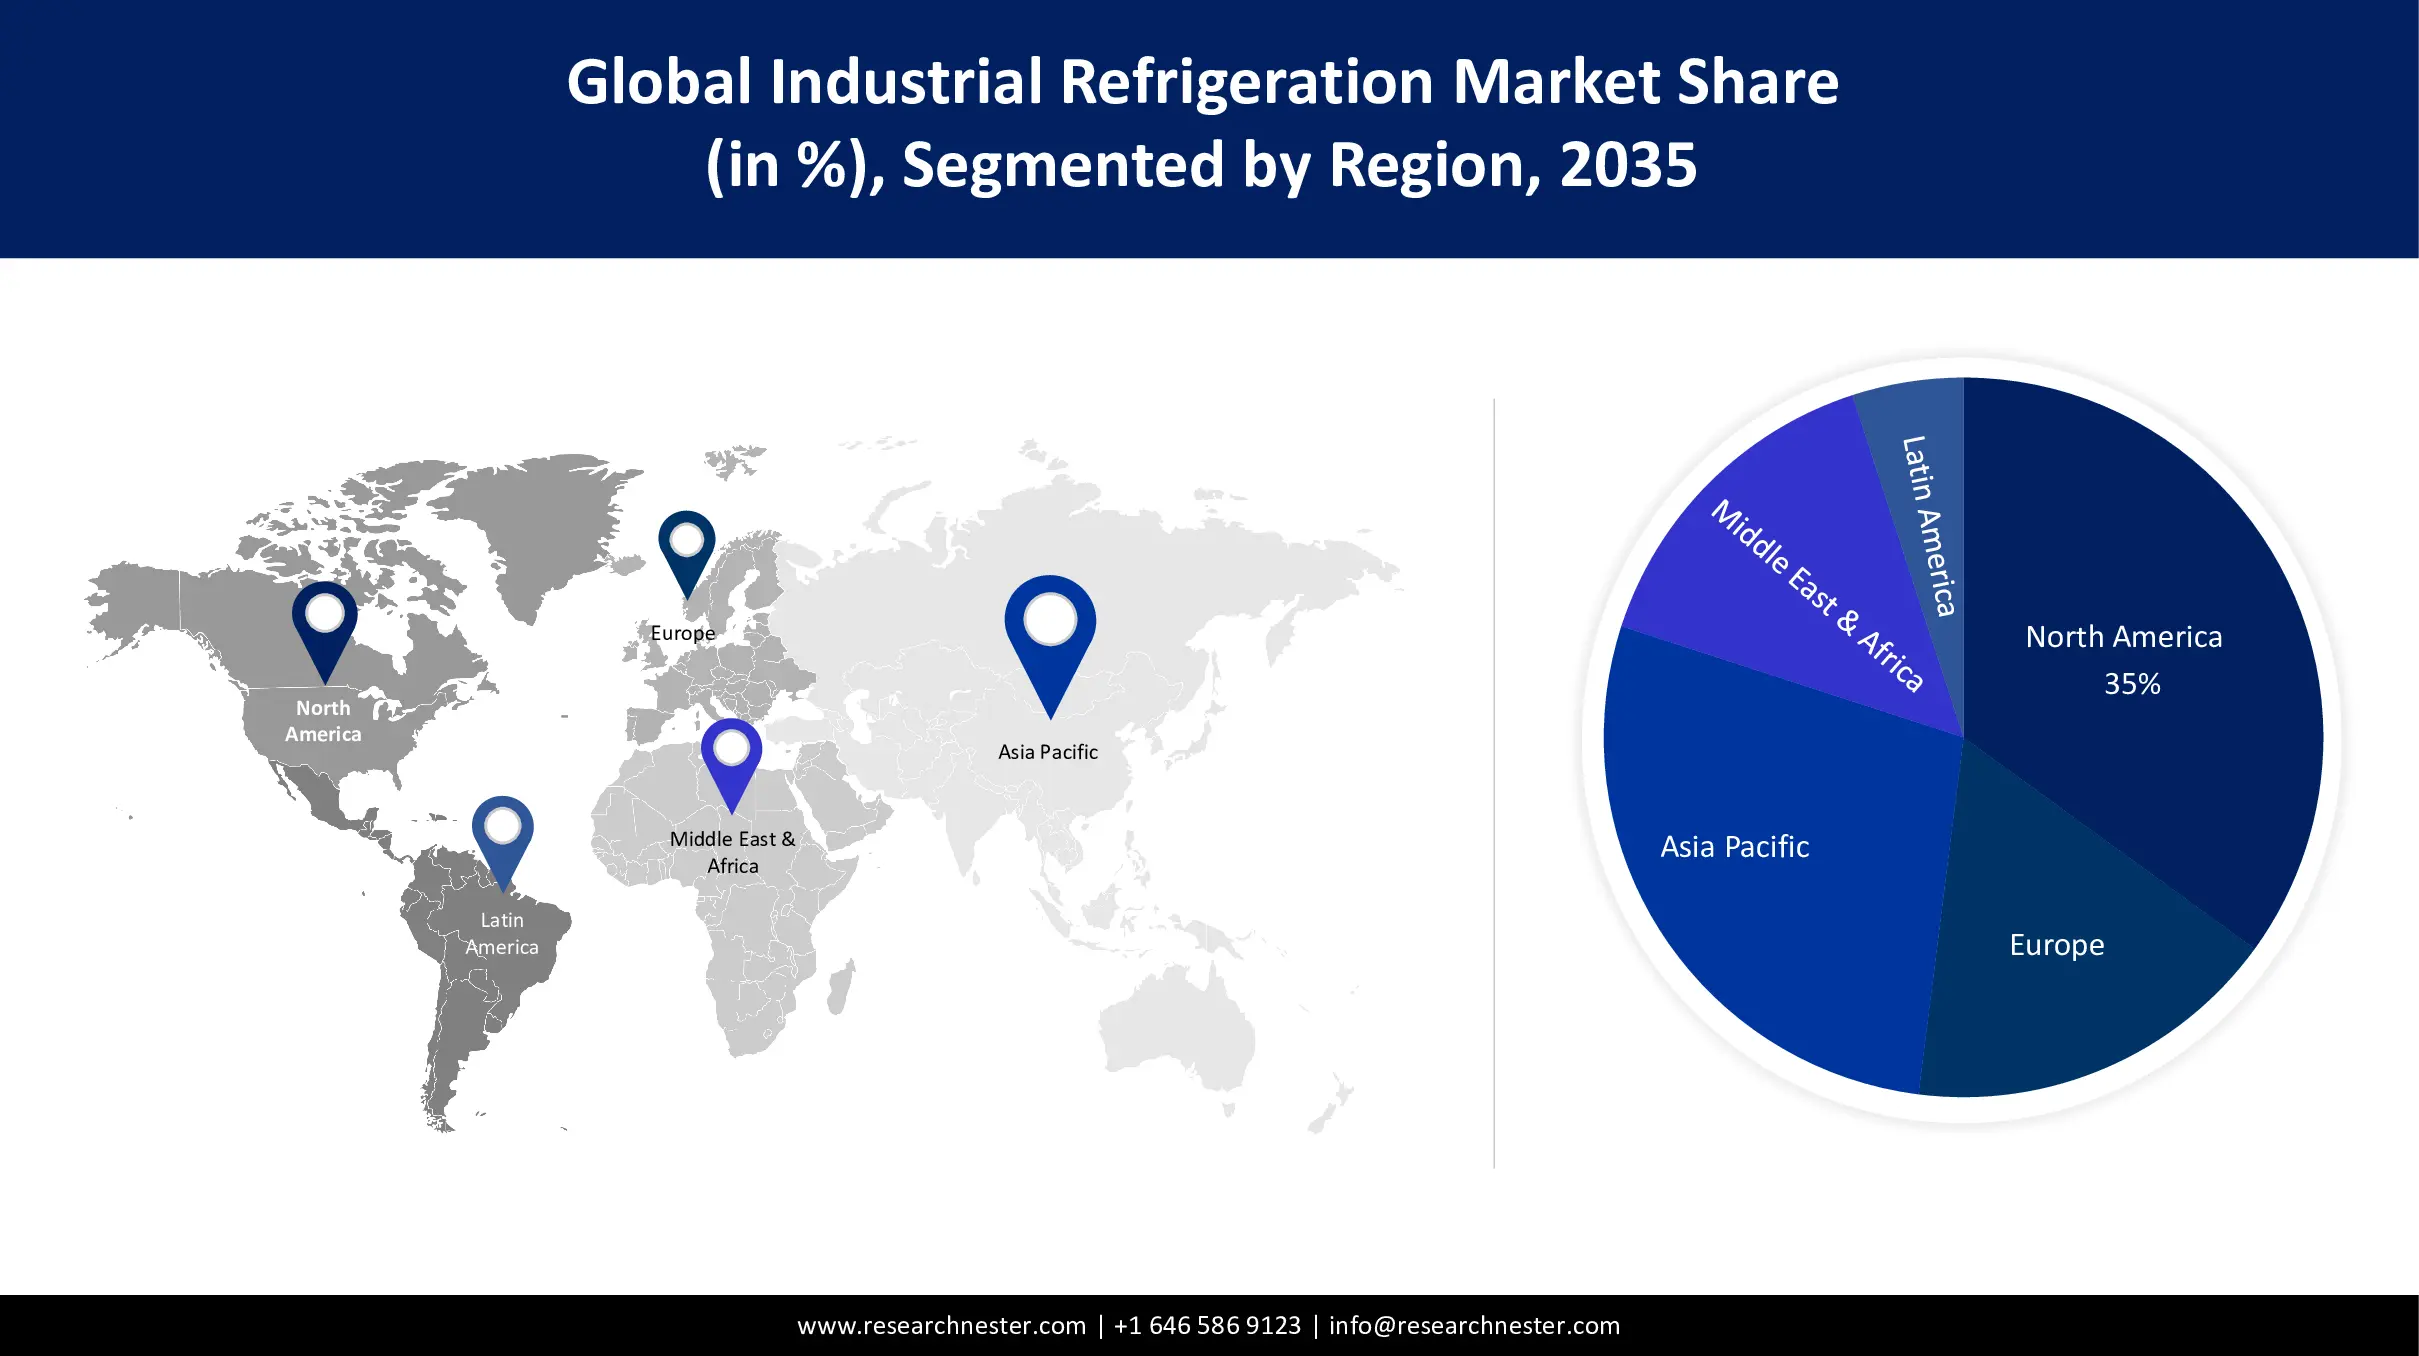 Industrial Refrigeration Market Size